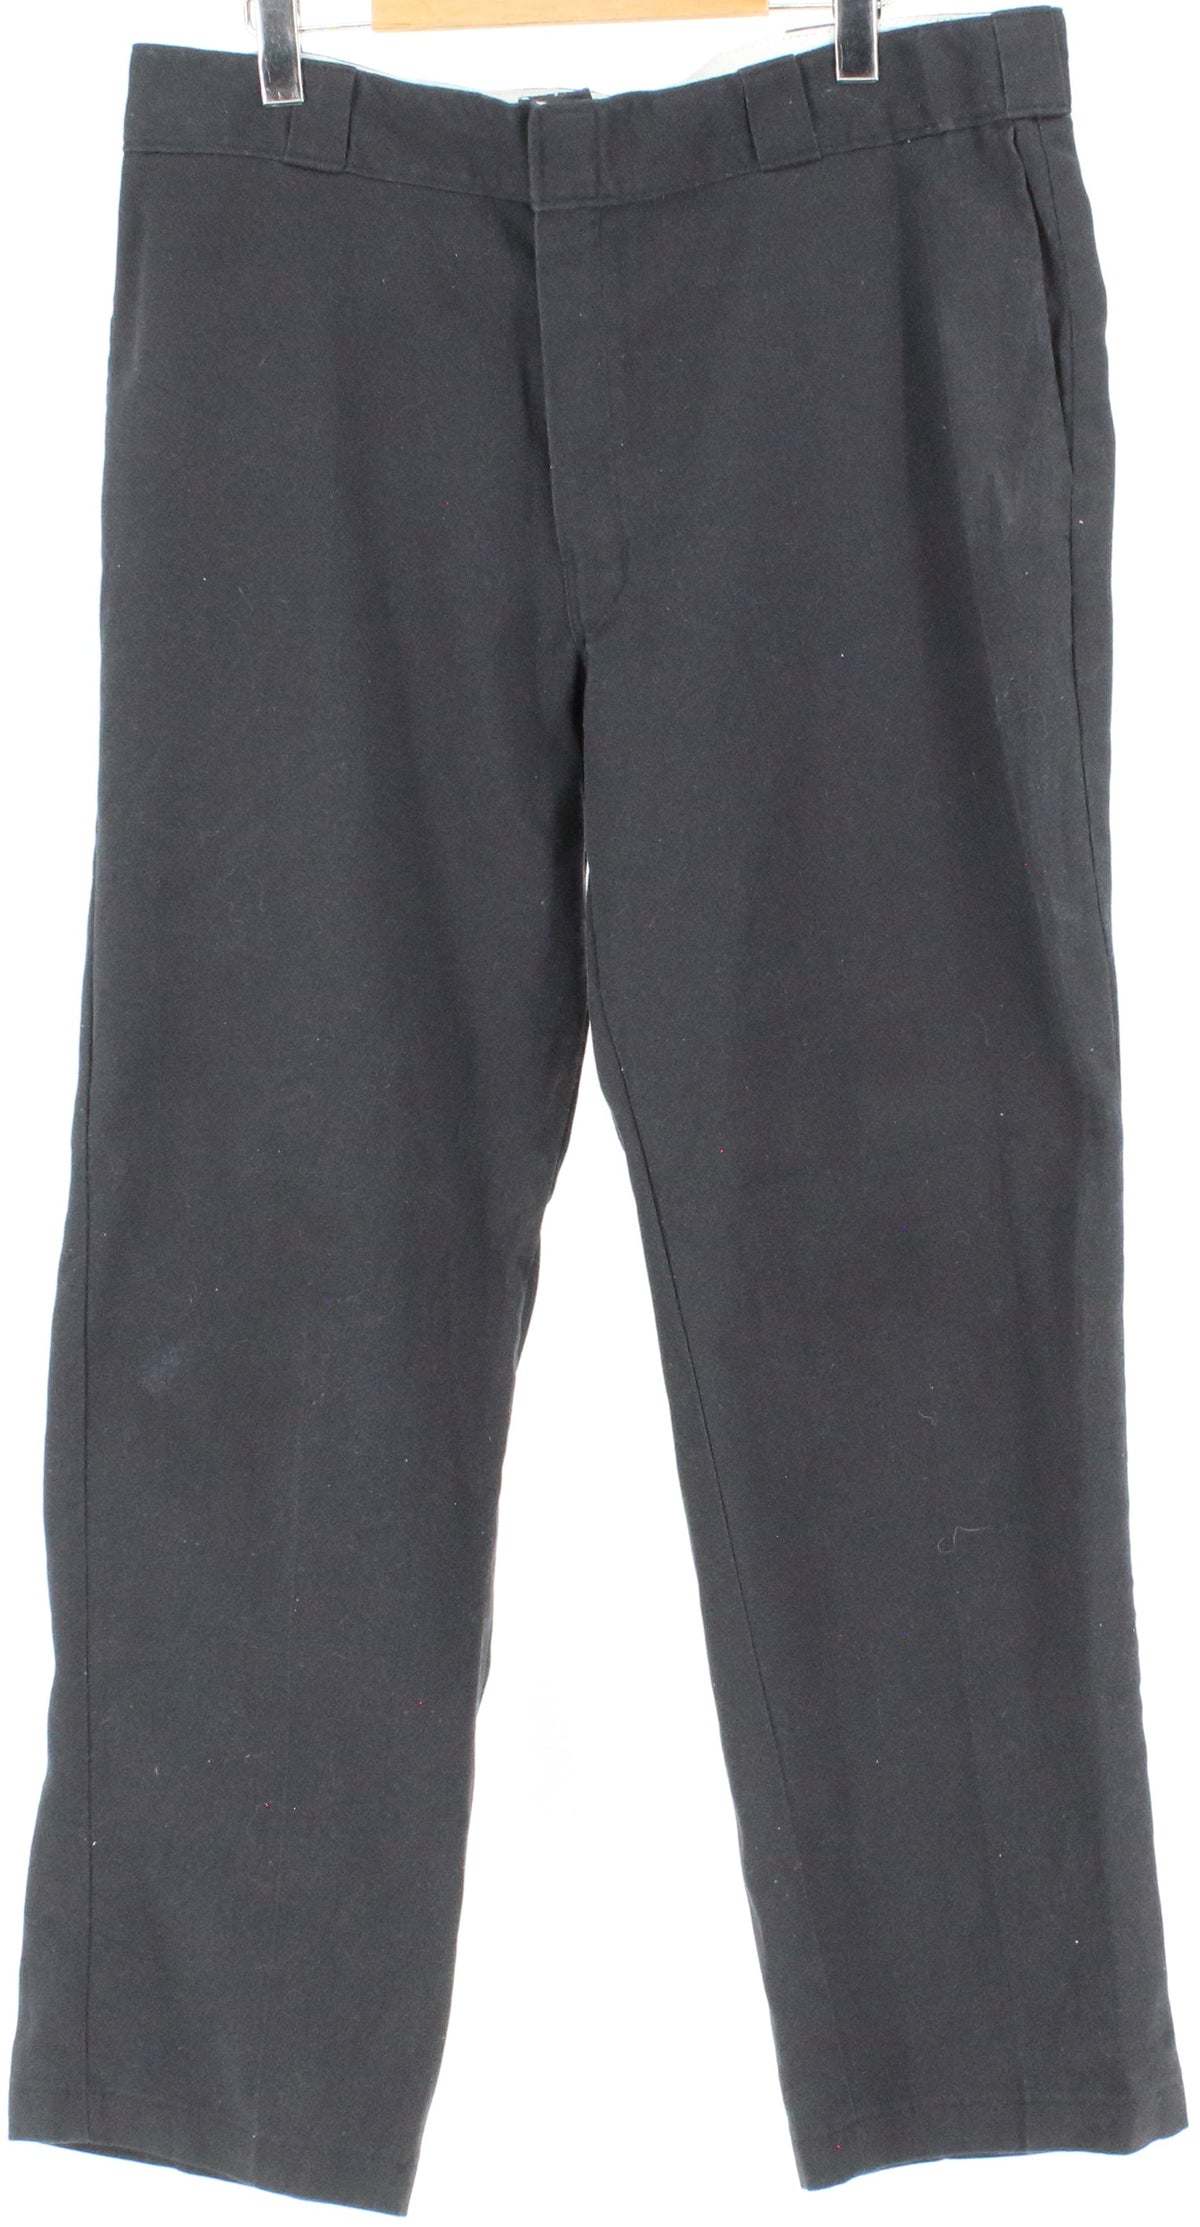 Dickies 874 Flex Original Fit Black Pants